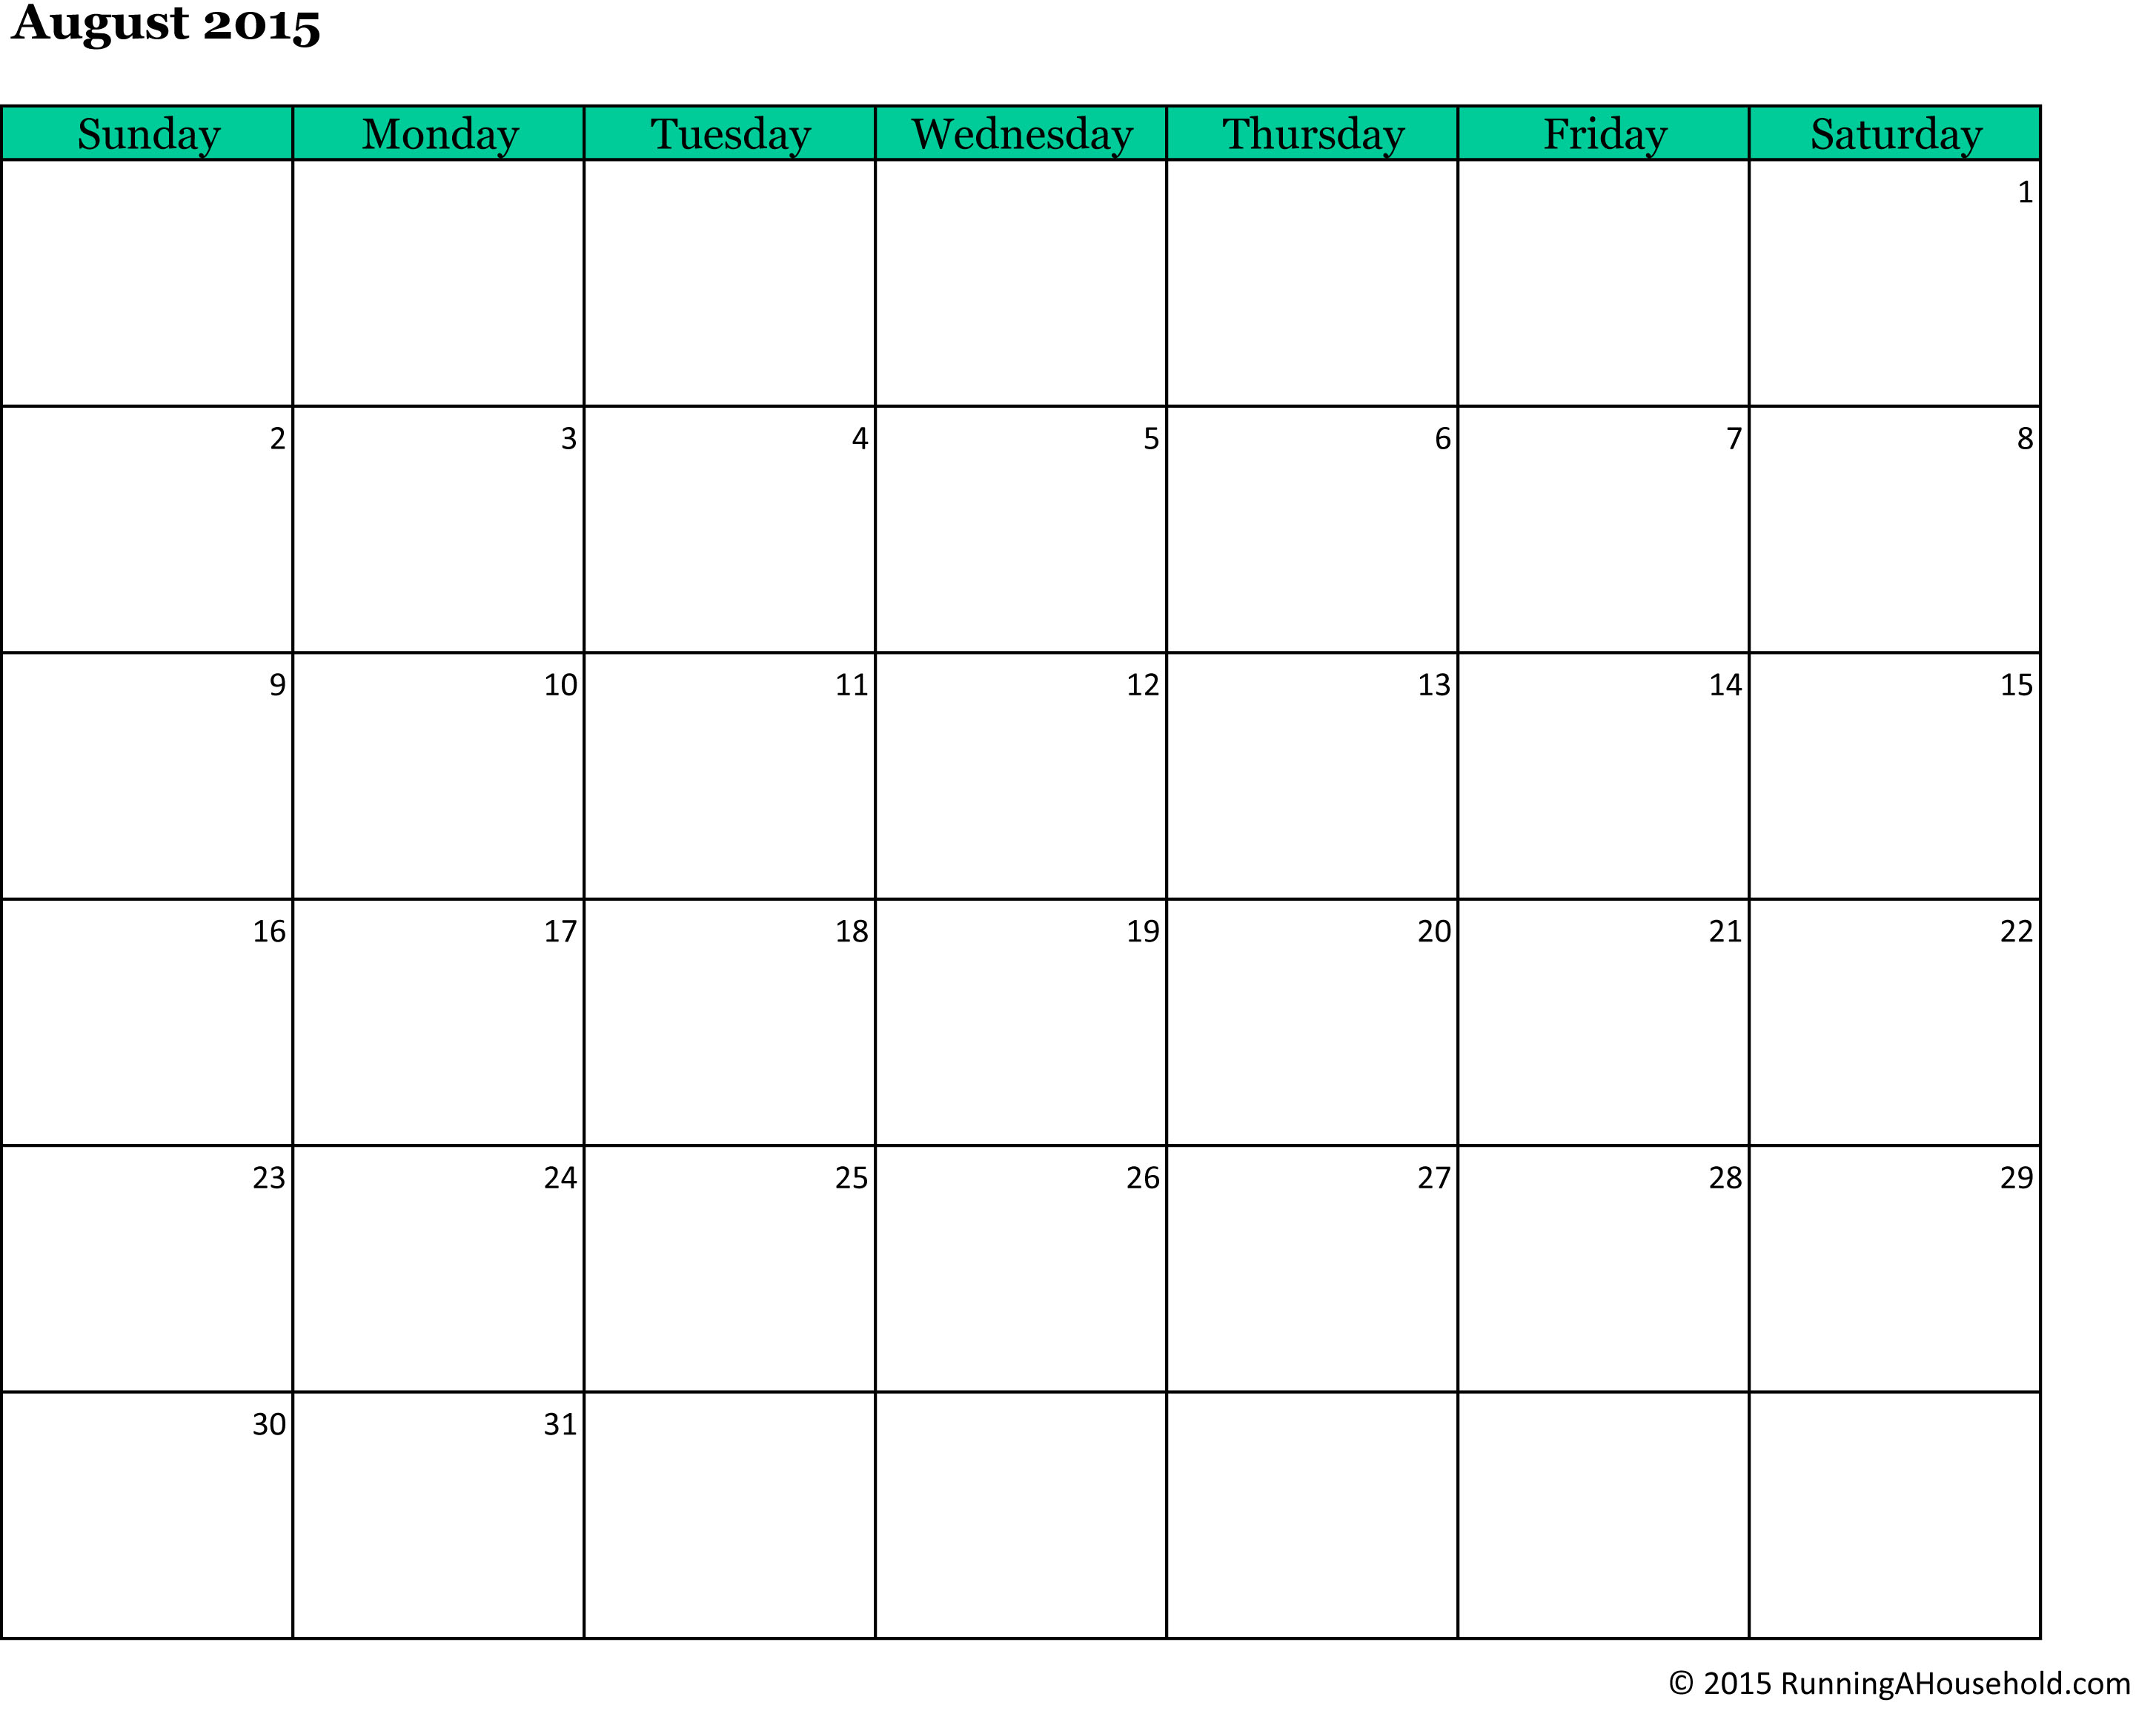 Blank Calendar August 2015